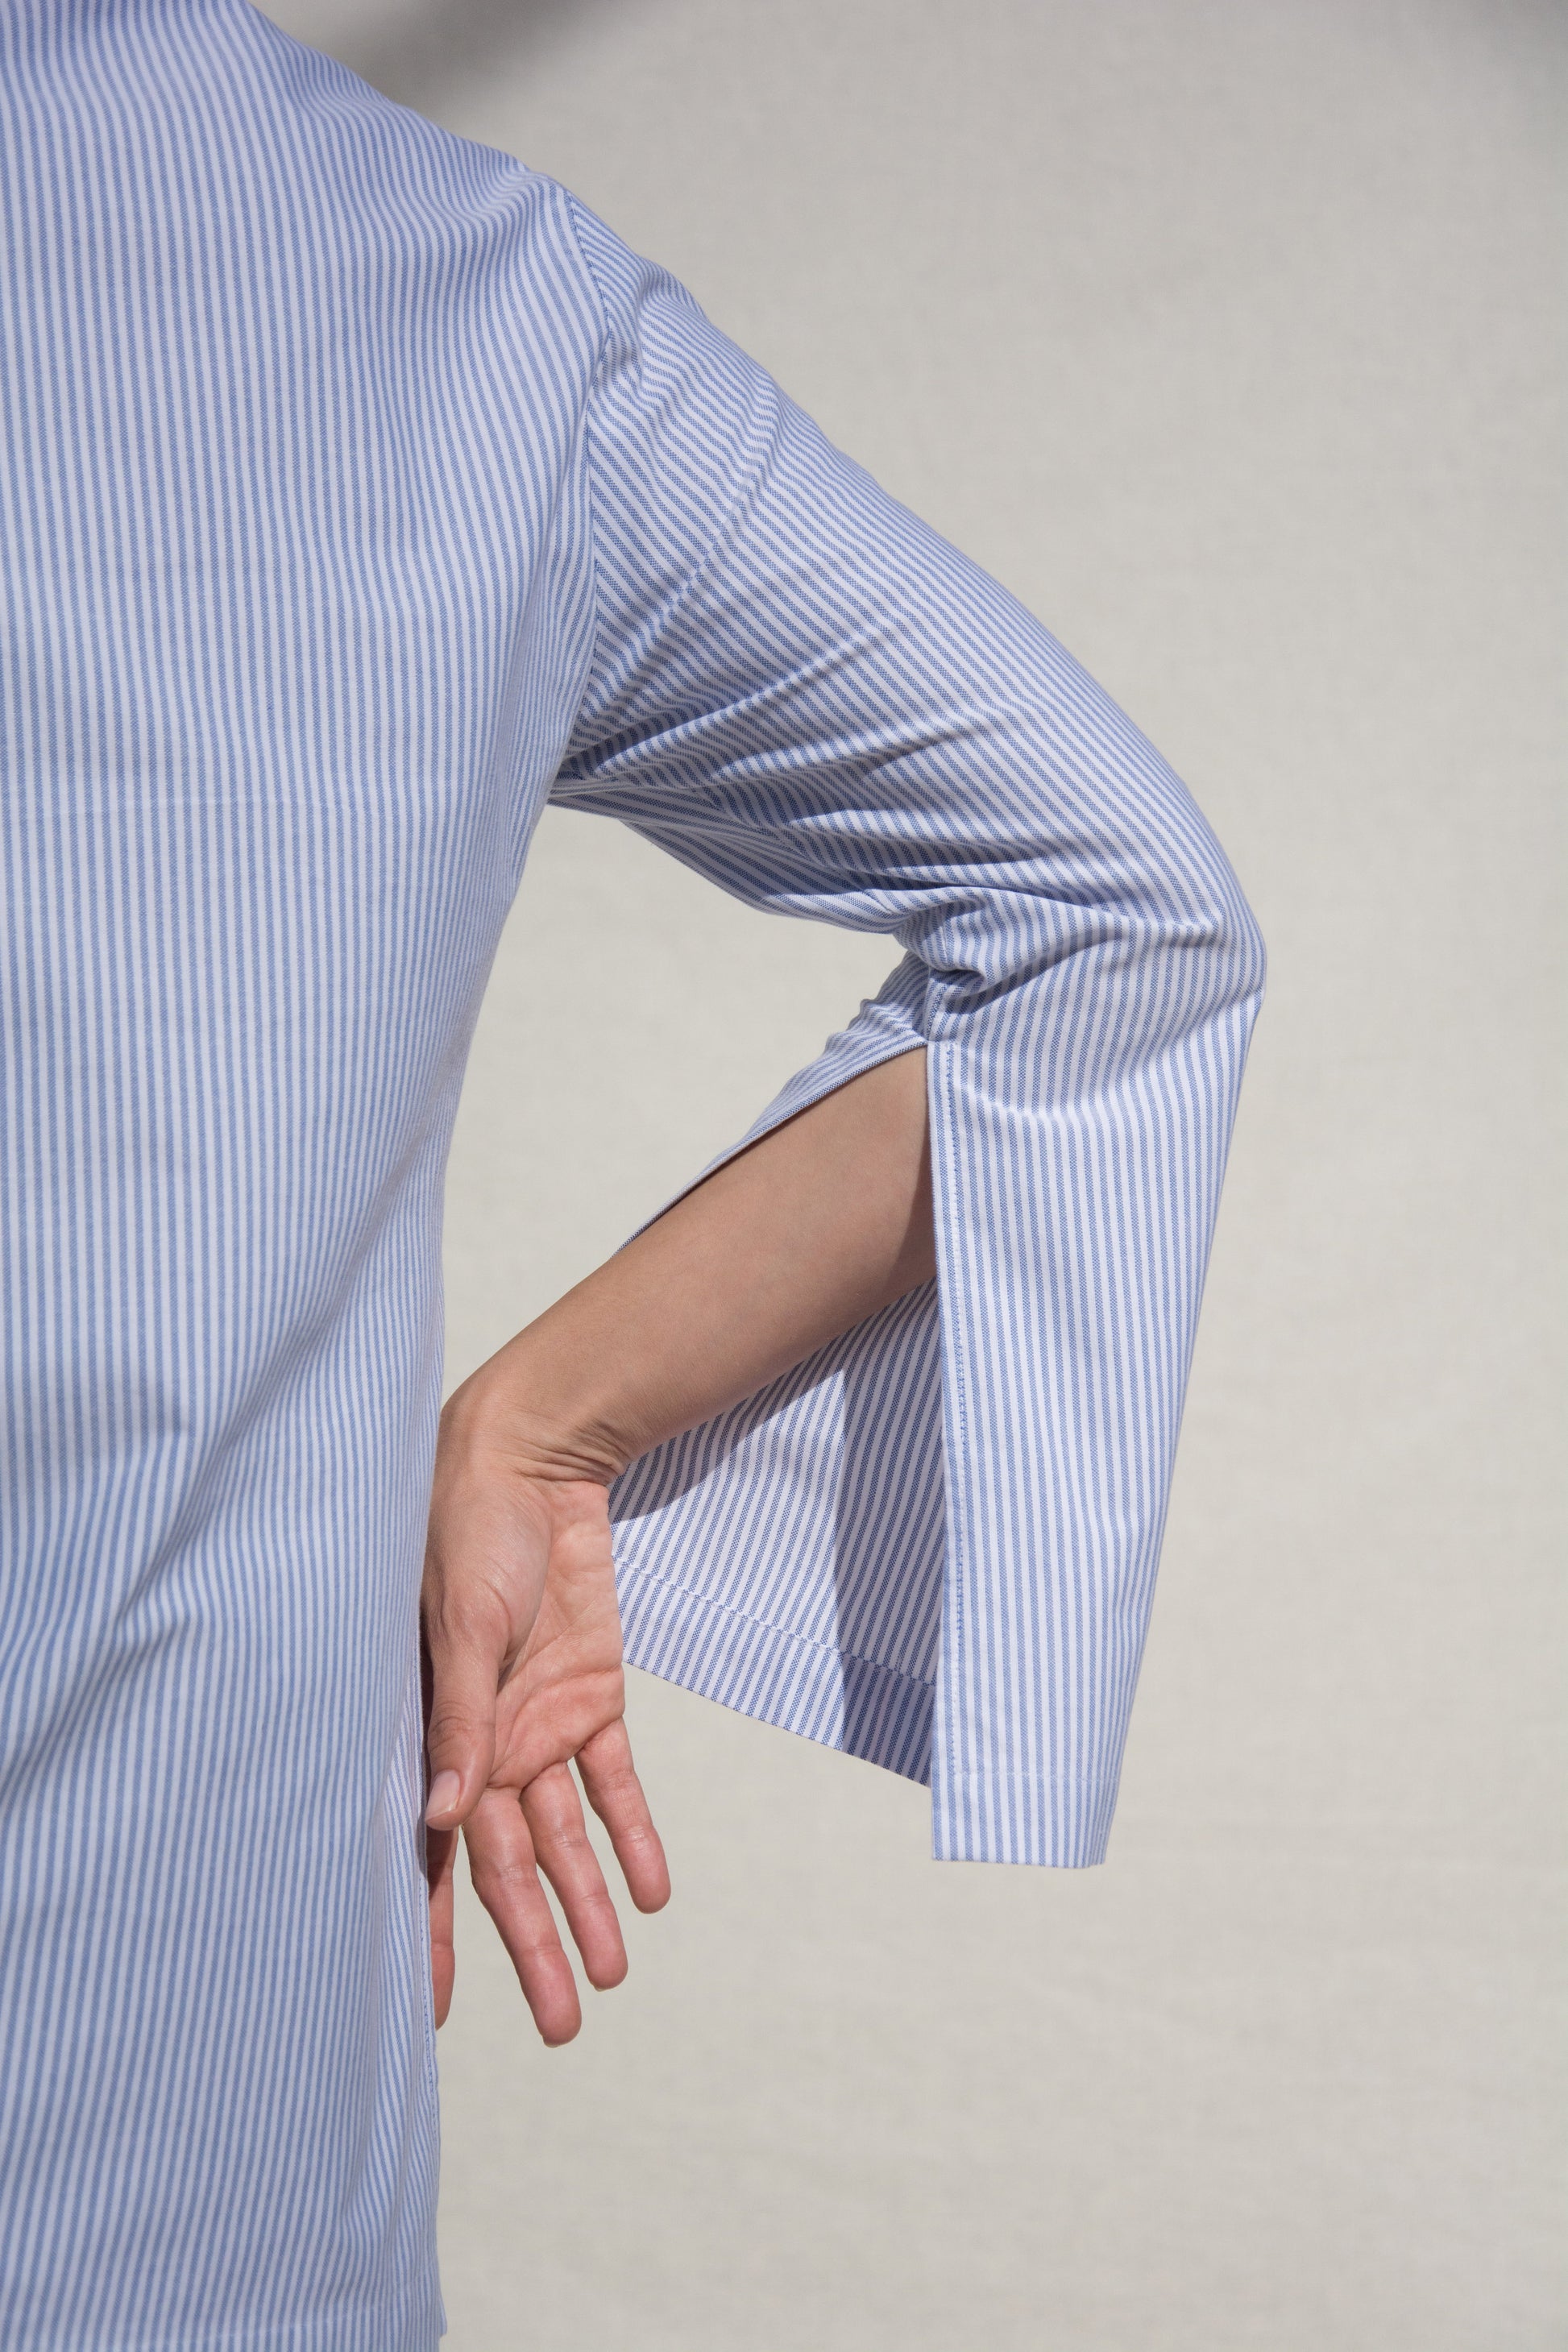 Detail image of woman's arm showing slit in sleeve. Indigo stripe cotton.